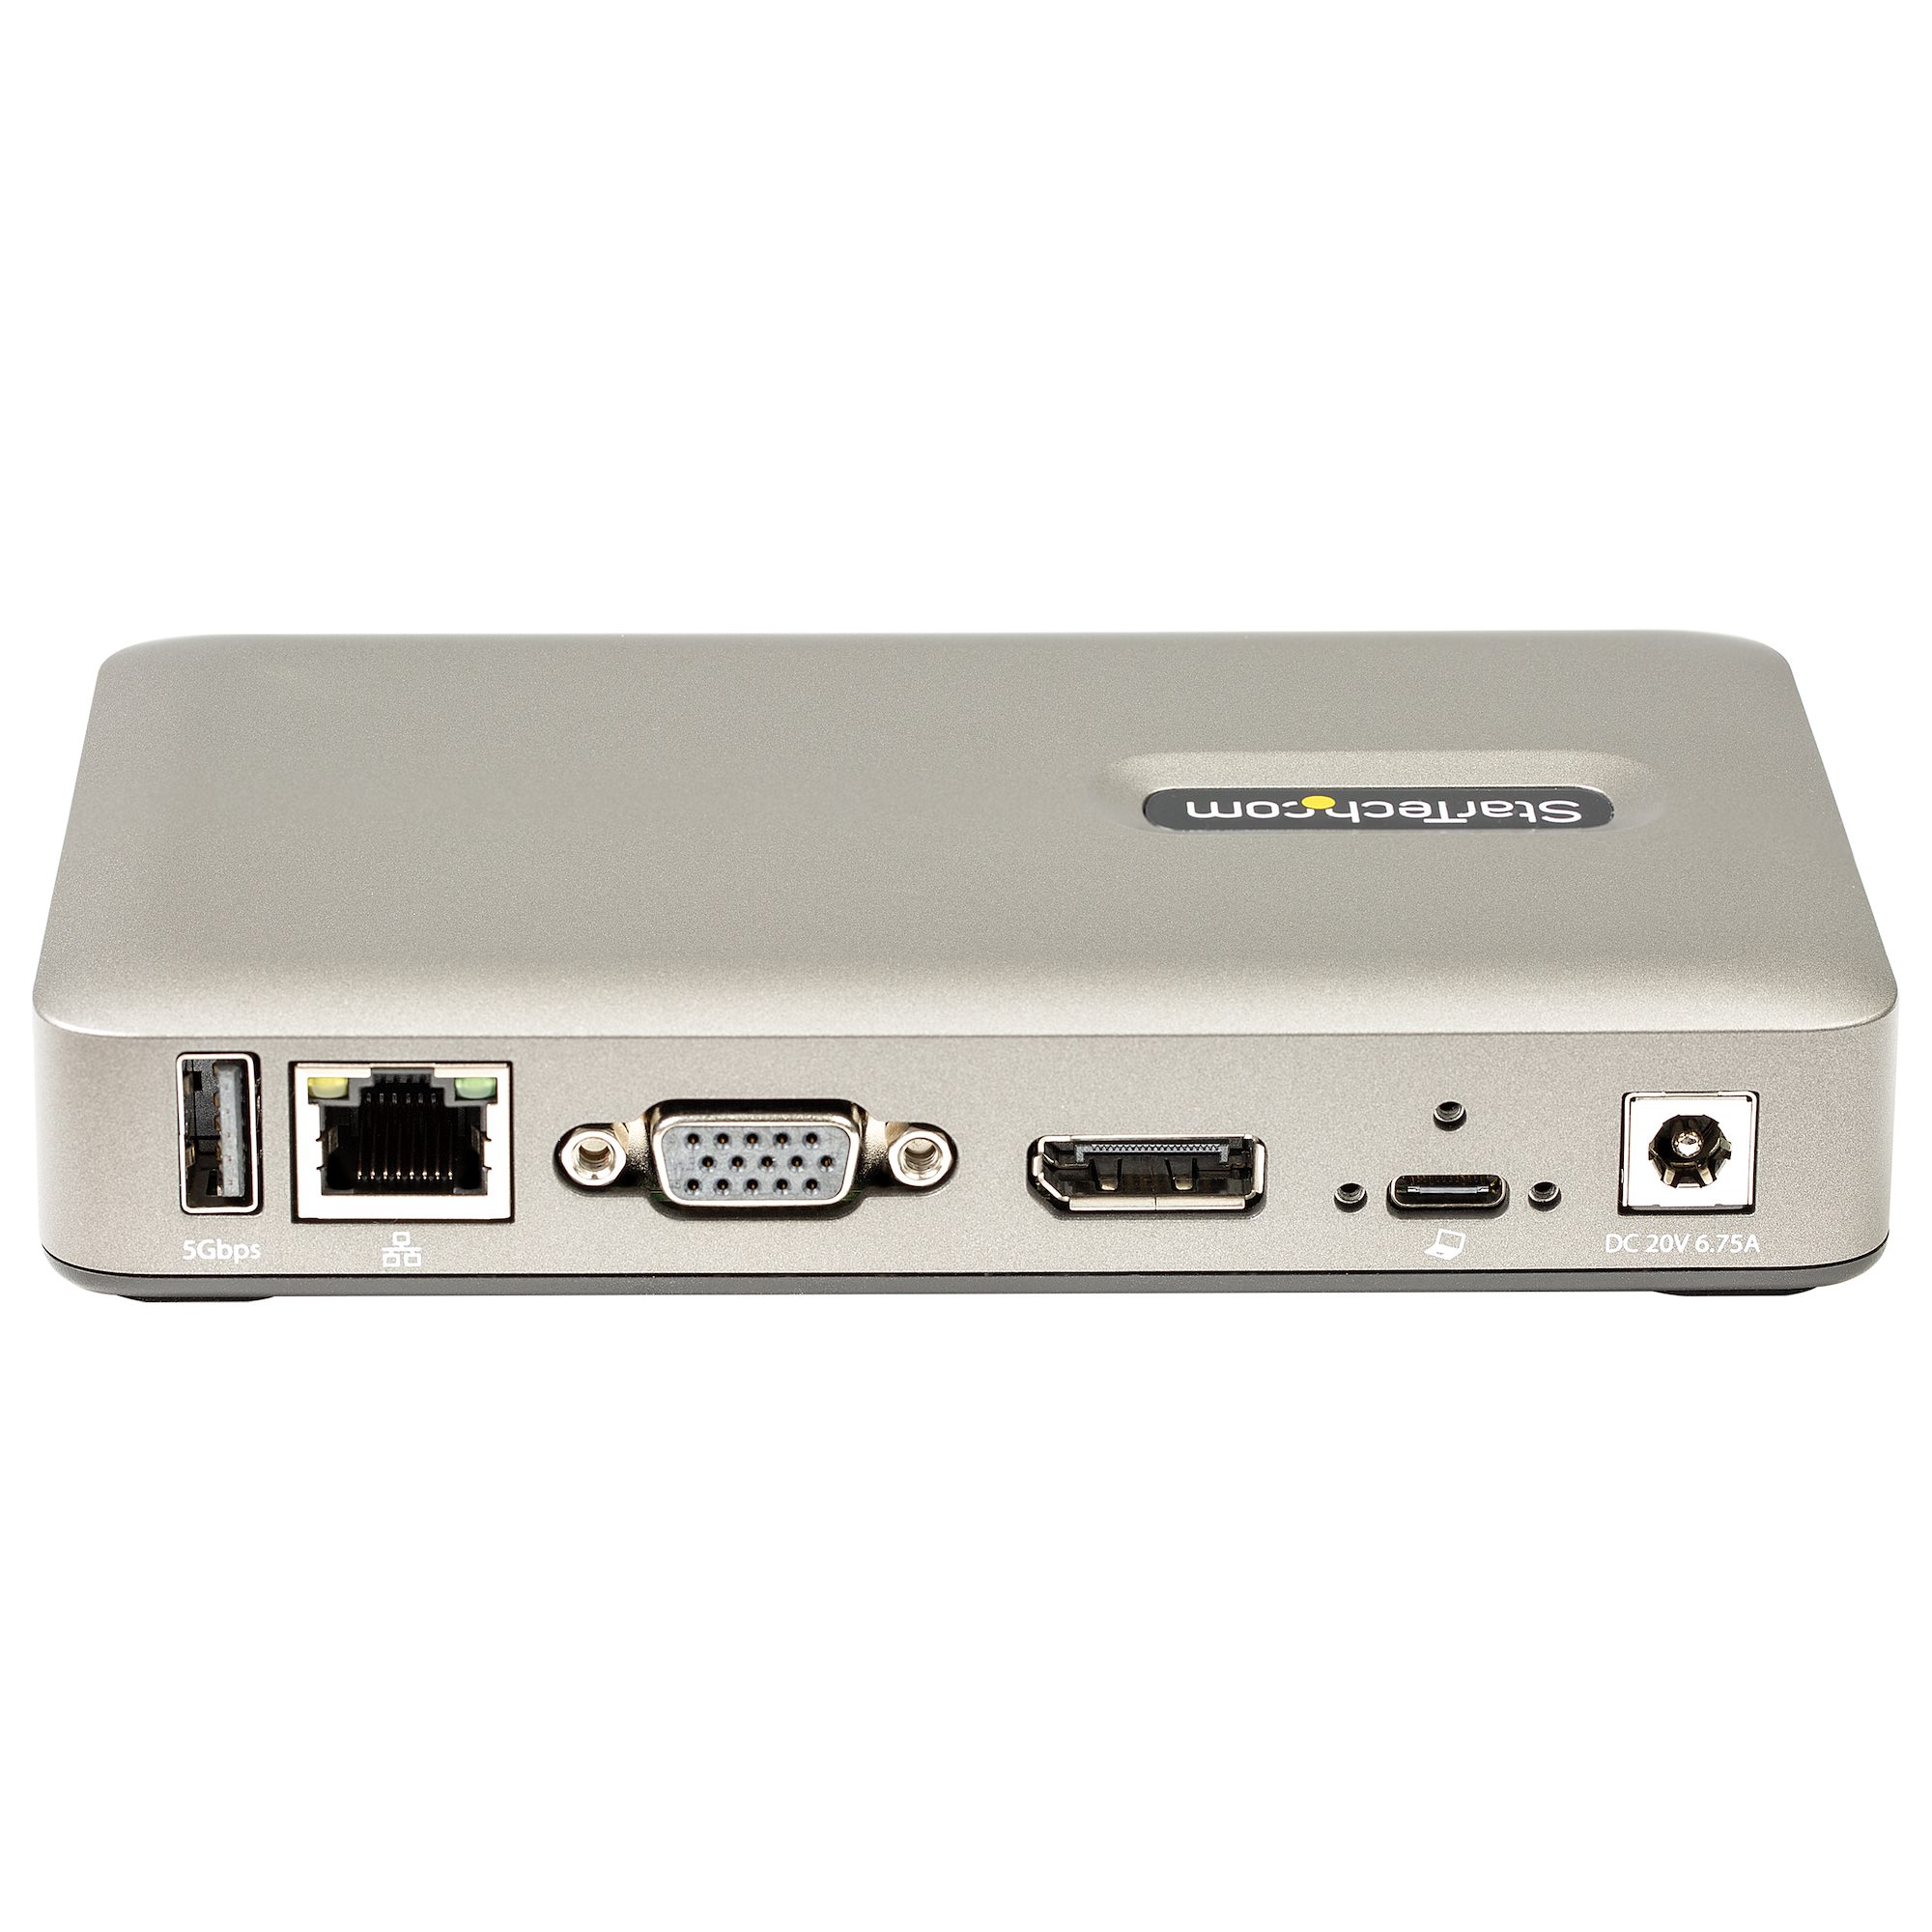 StarTech.com - Docking Station USB 3.0 de 2 Monitores para Portátil - HDMI  y DVI/VGA - Hub Ladrón 6x USB-A - GbE - Audio - Repli